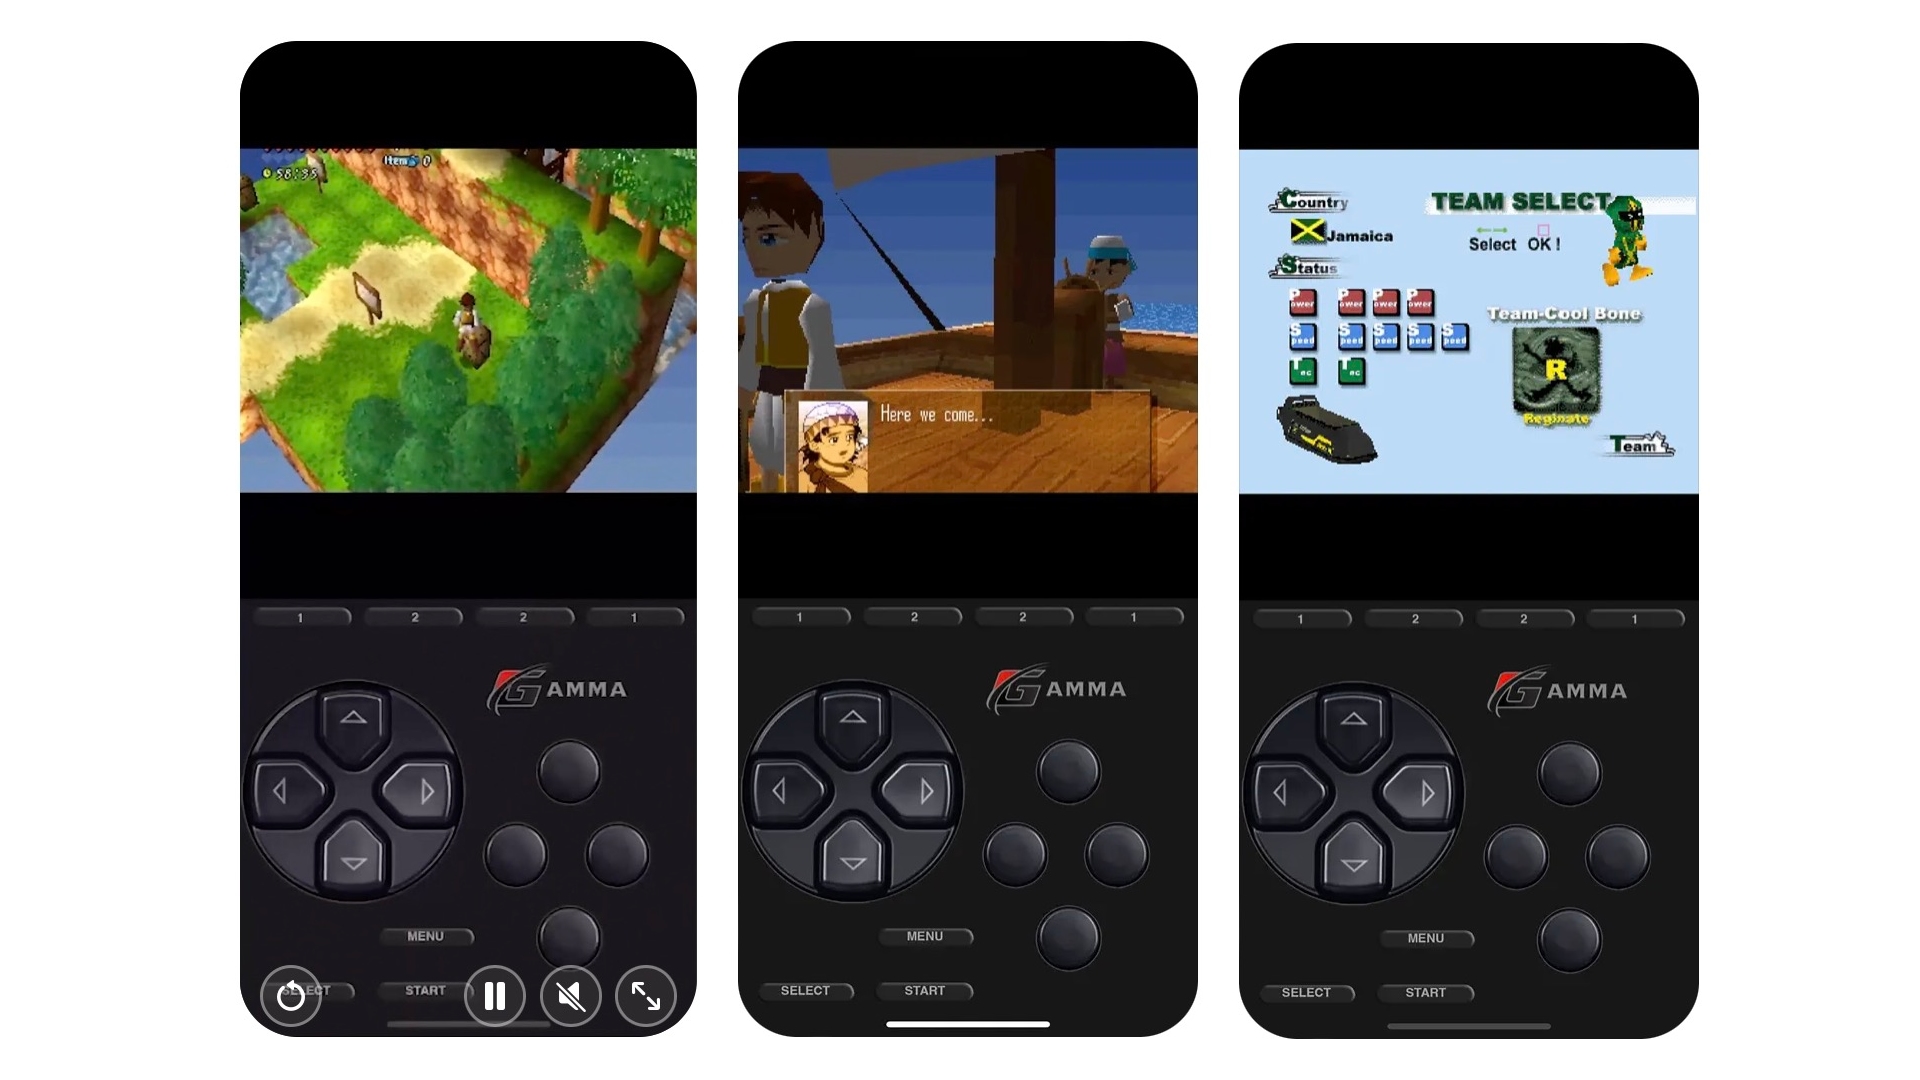 Gamma Emulator Brings Classic PS1 Gaming to iPhone and iPad